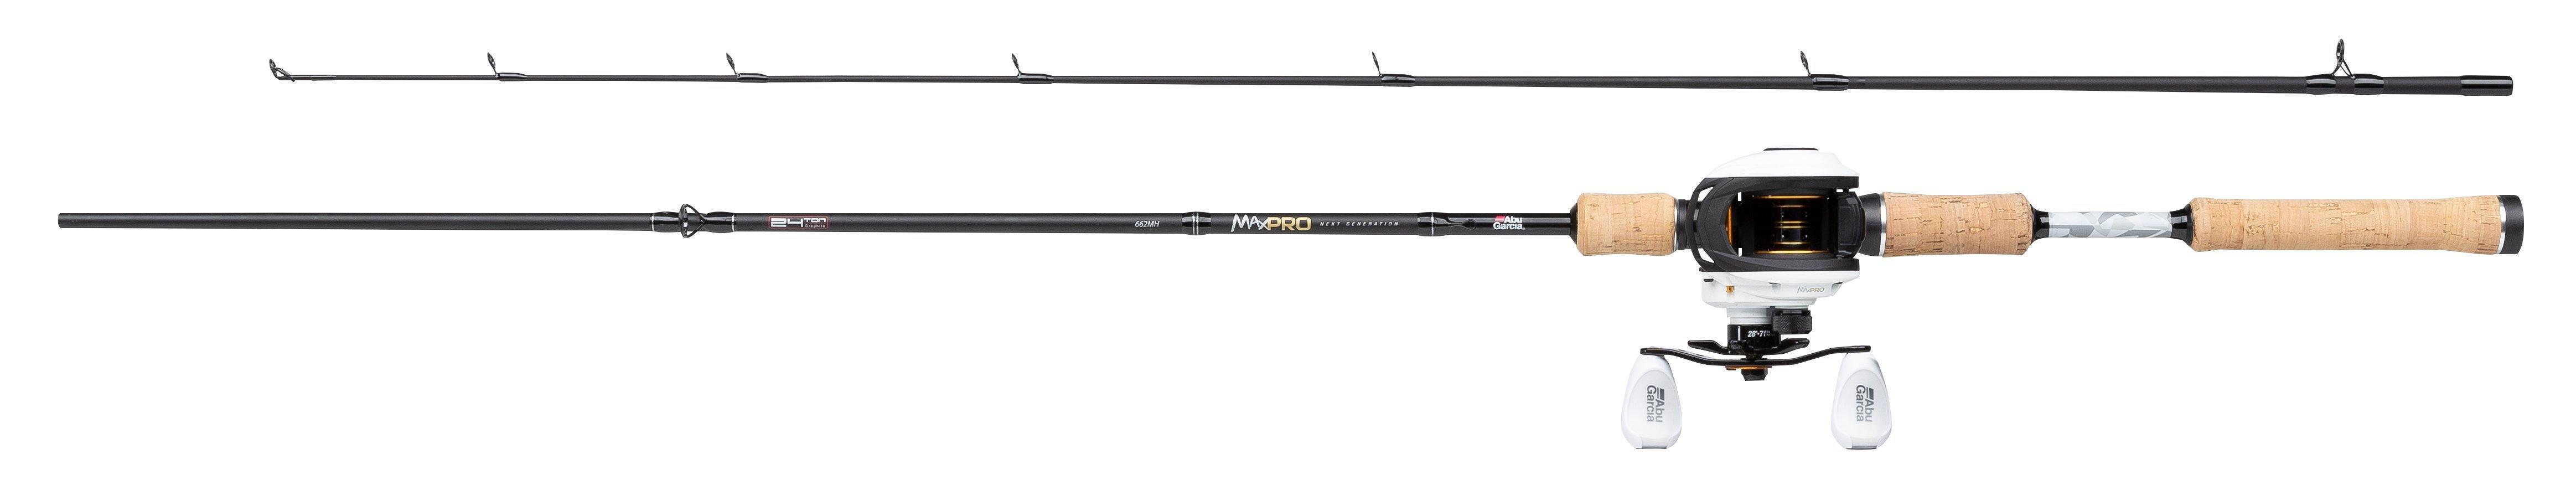 Abu Garcia Baitcast Combo Medium Power Fishing Rod & Reel Combos for sale